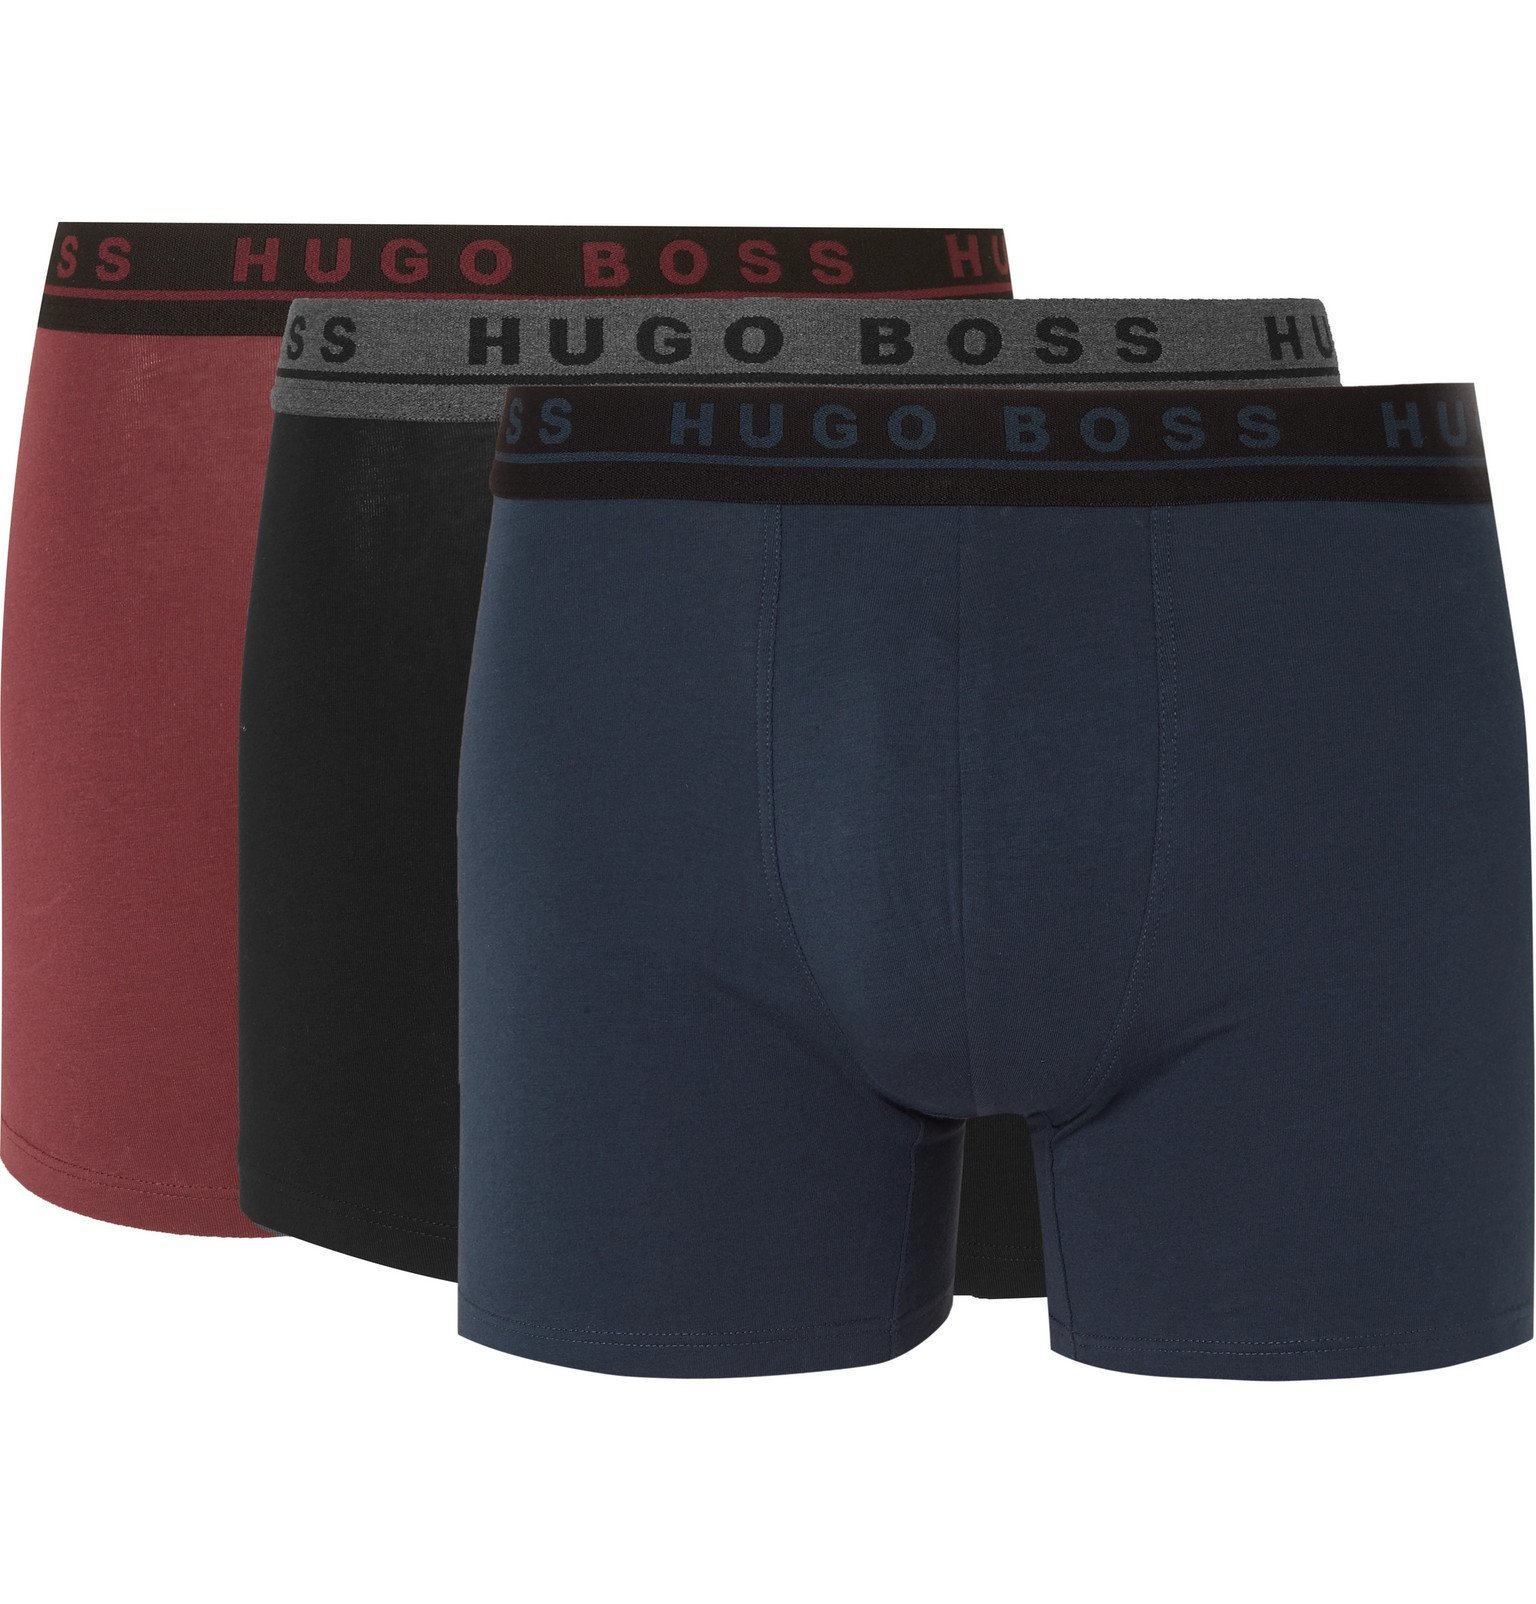 boxer shorts hugo boss